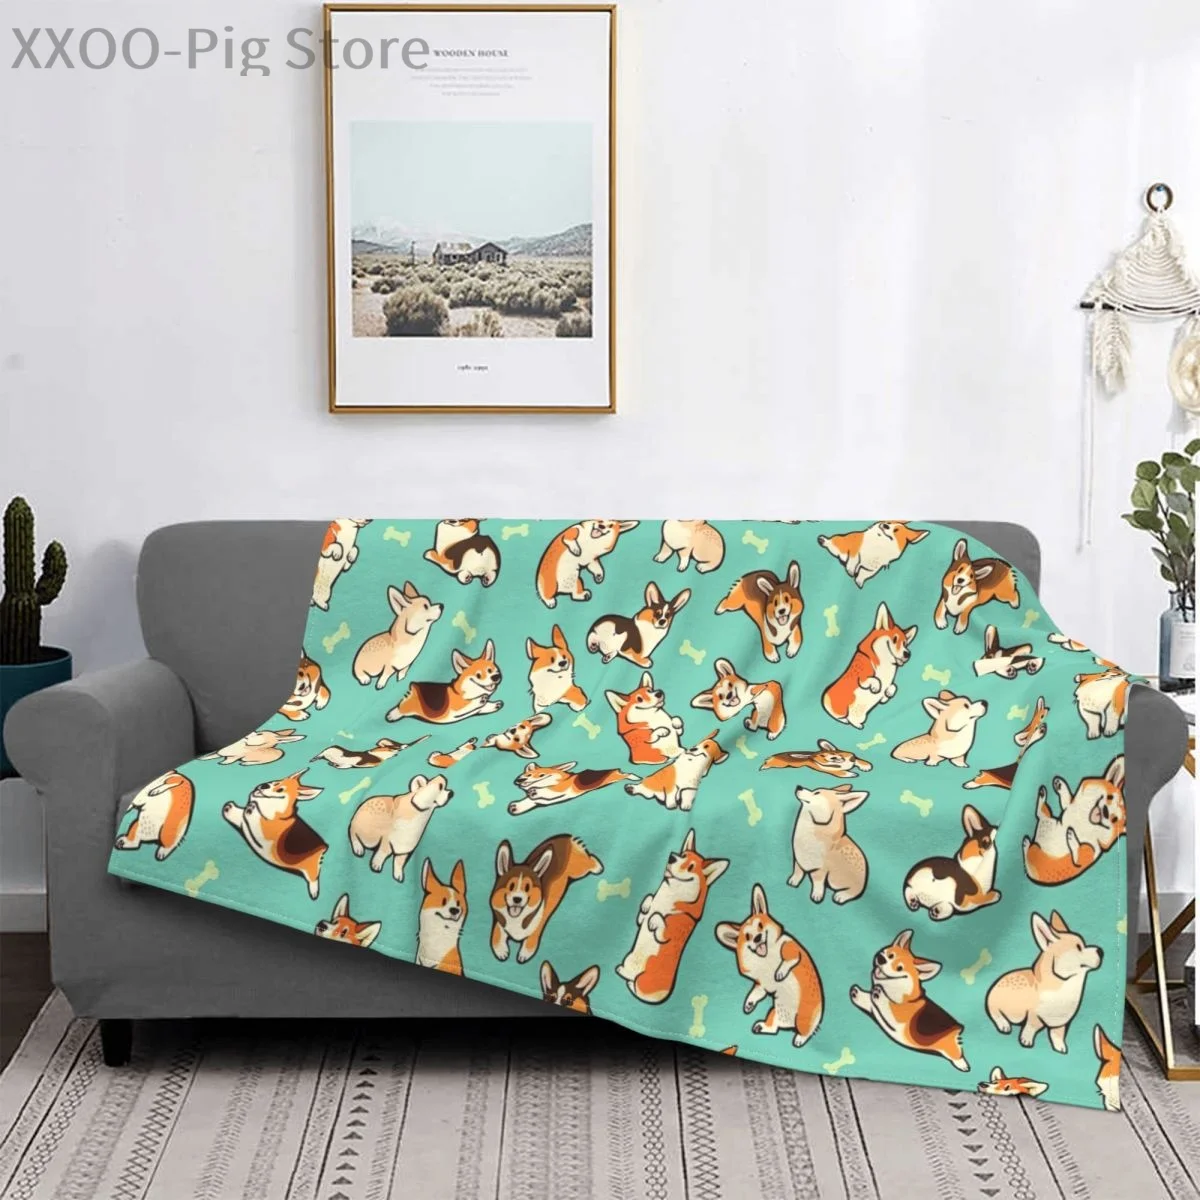 Dog Corgi Cartoon Throw Blanket Cute Kids Design Corgis in Green Blankets for Beds Christmas Decorations for Home